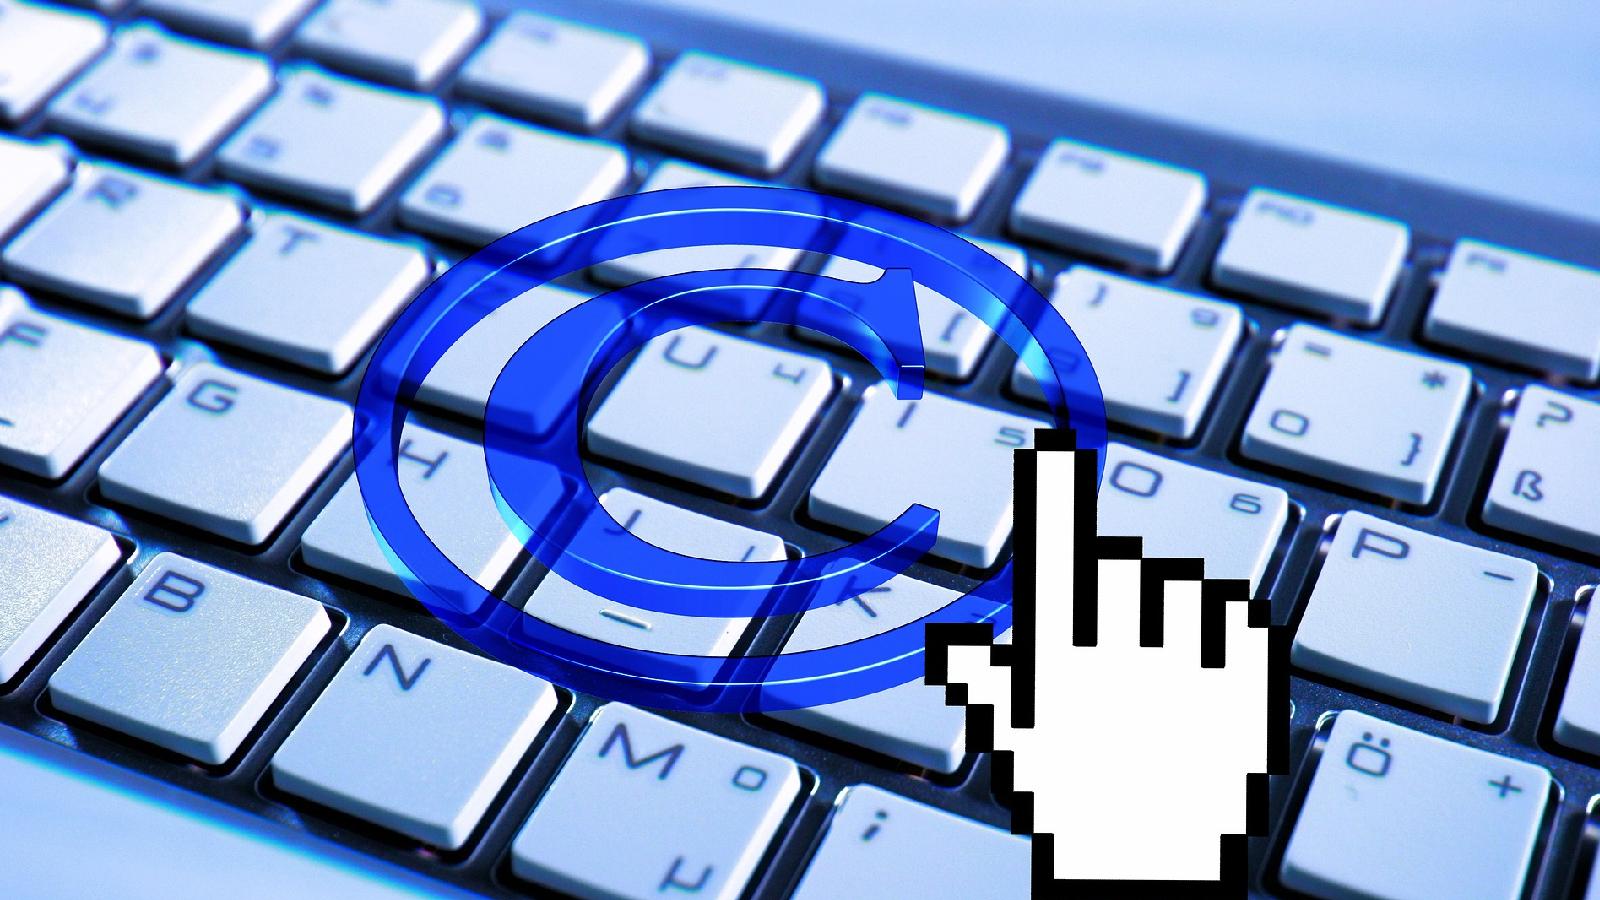 Copyright symbol and a keyboard